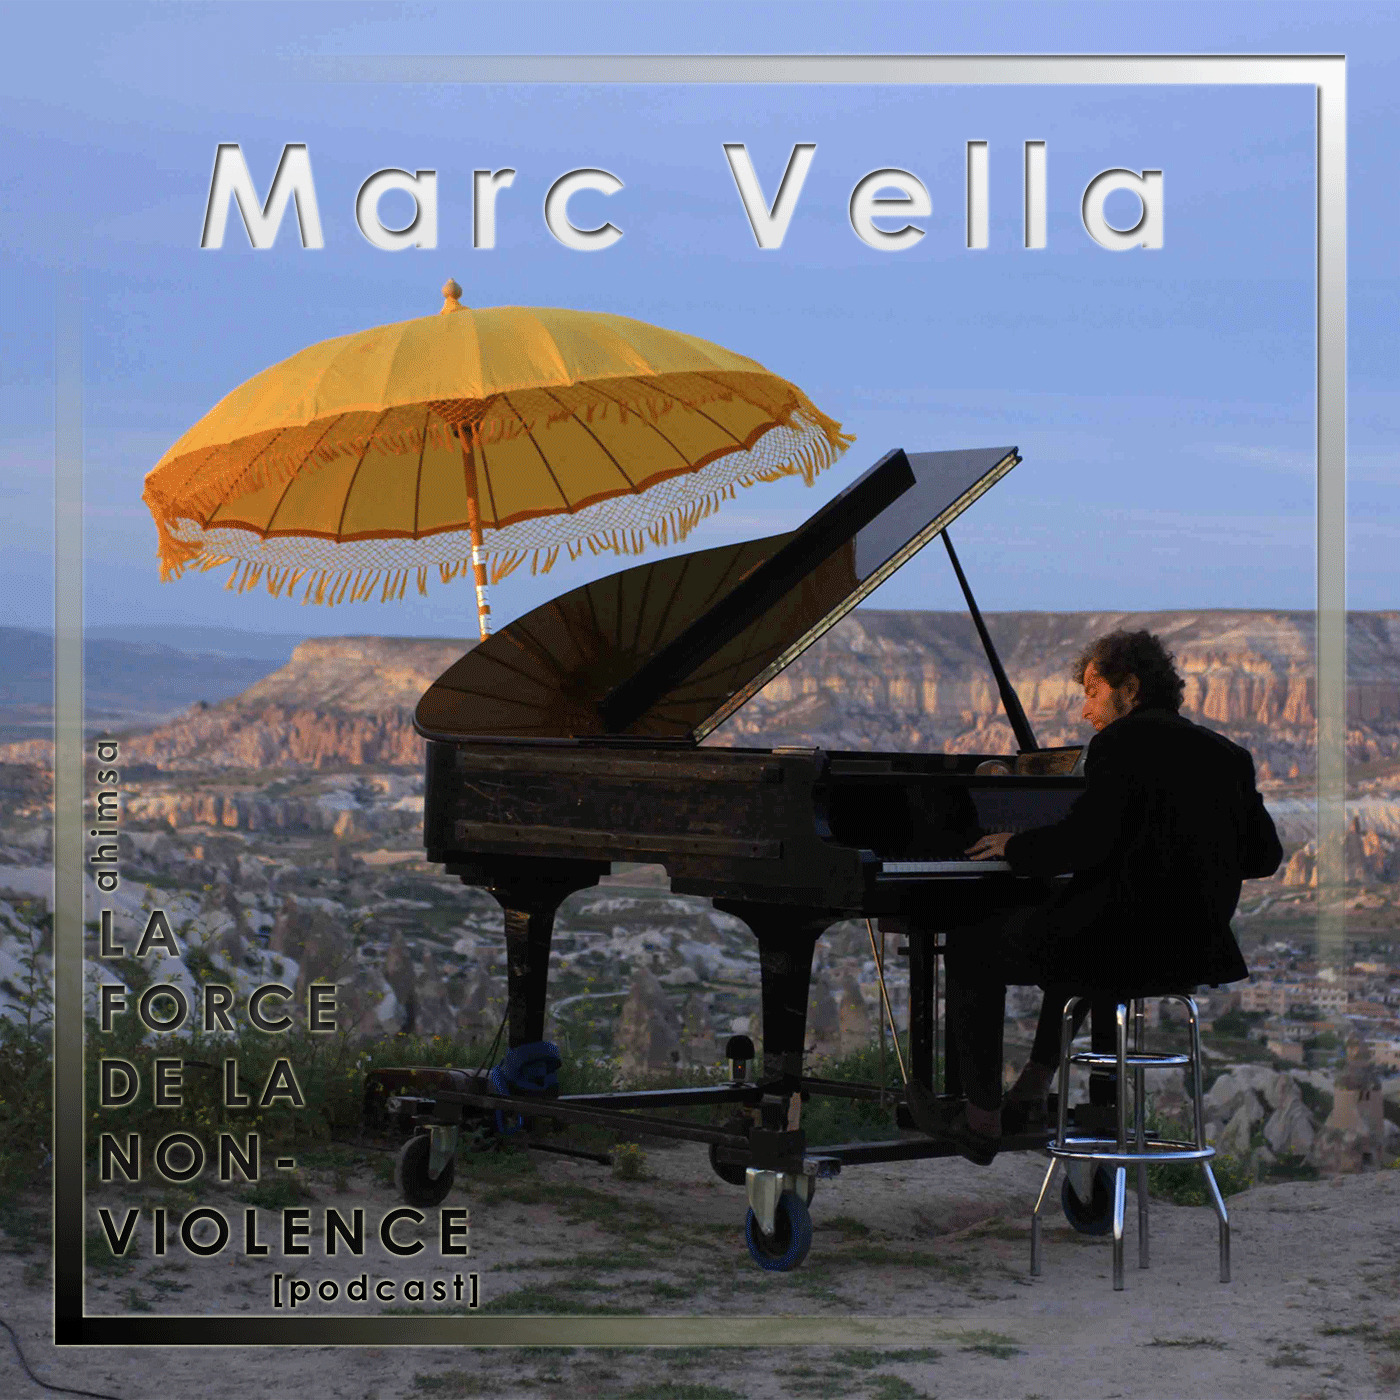 30. Marc Vella